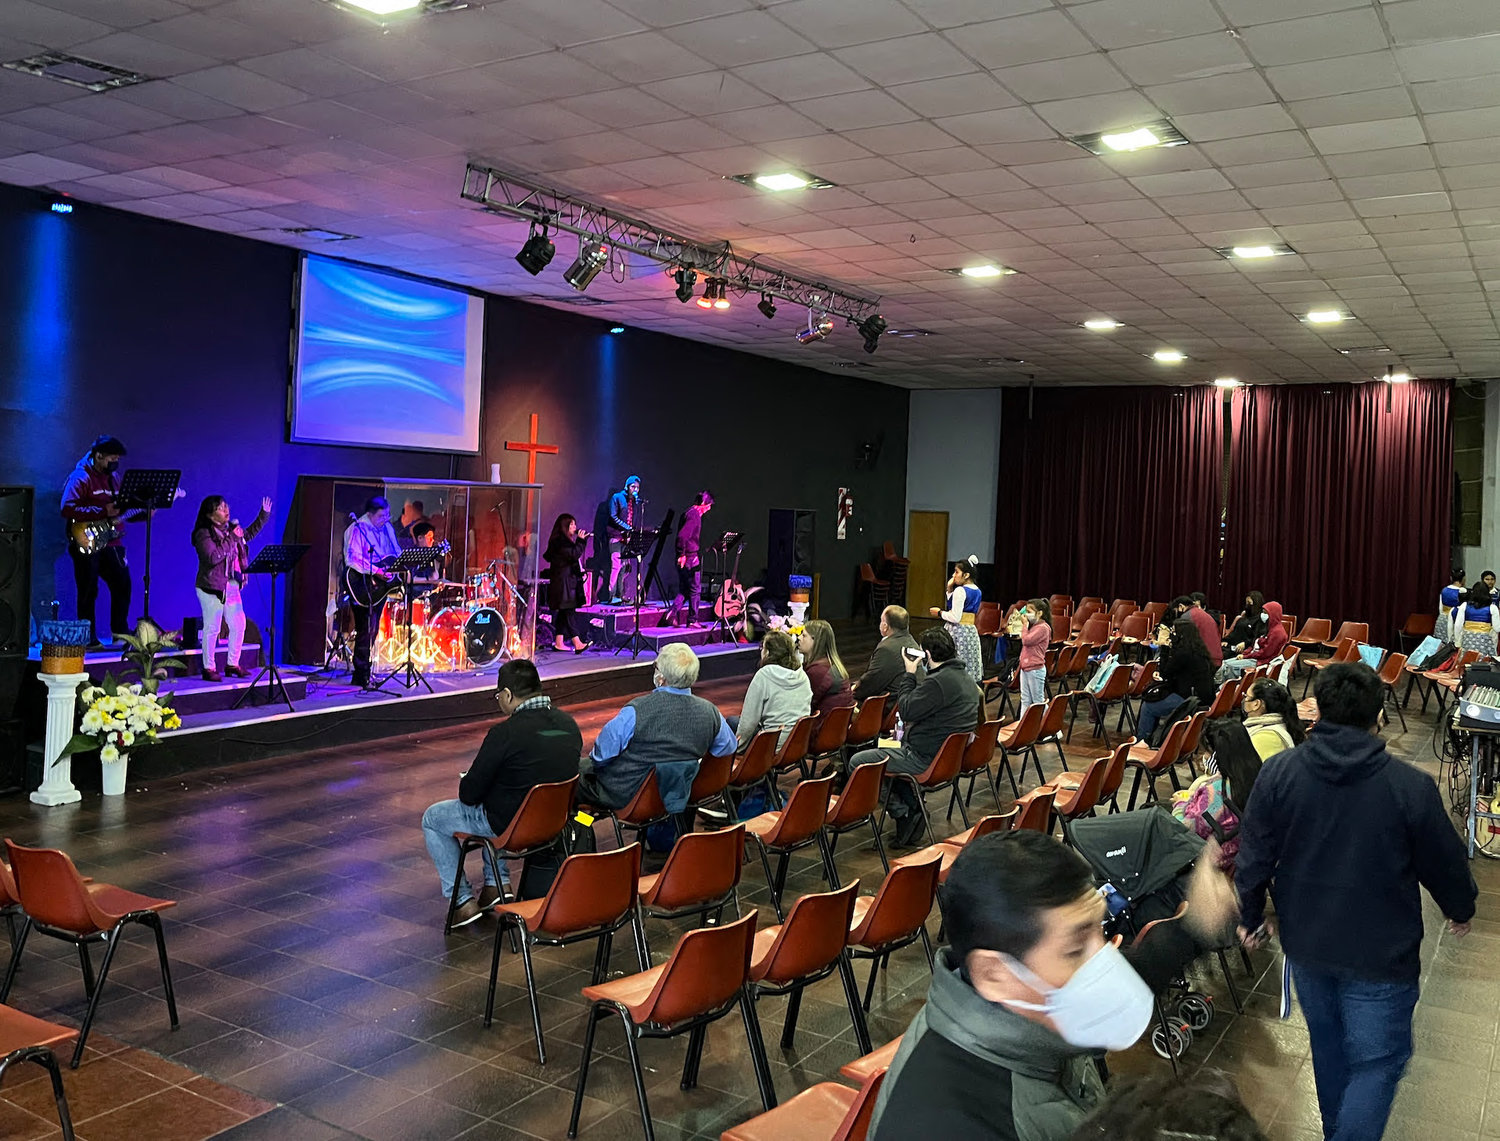 Sunday morning worship at Sinai Baptist Church, where Abraham Aranda is pastor. This is a primarily Bolivian congregation in the neighborhood of Nueva Pompeya.